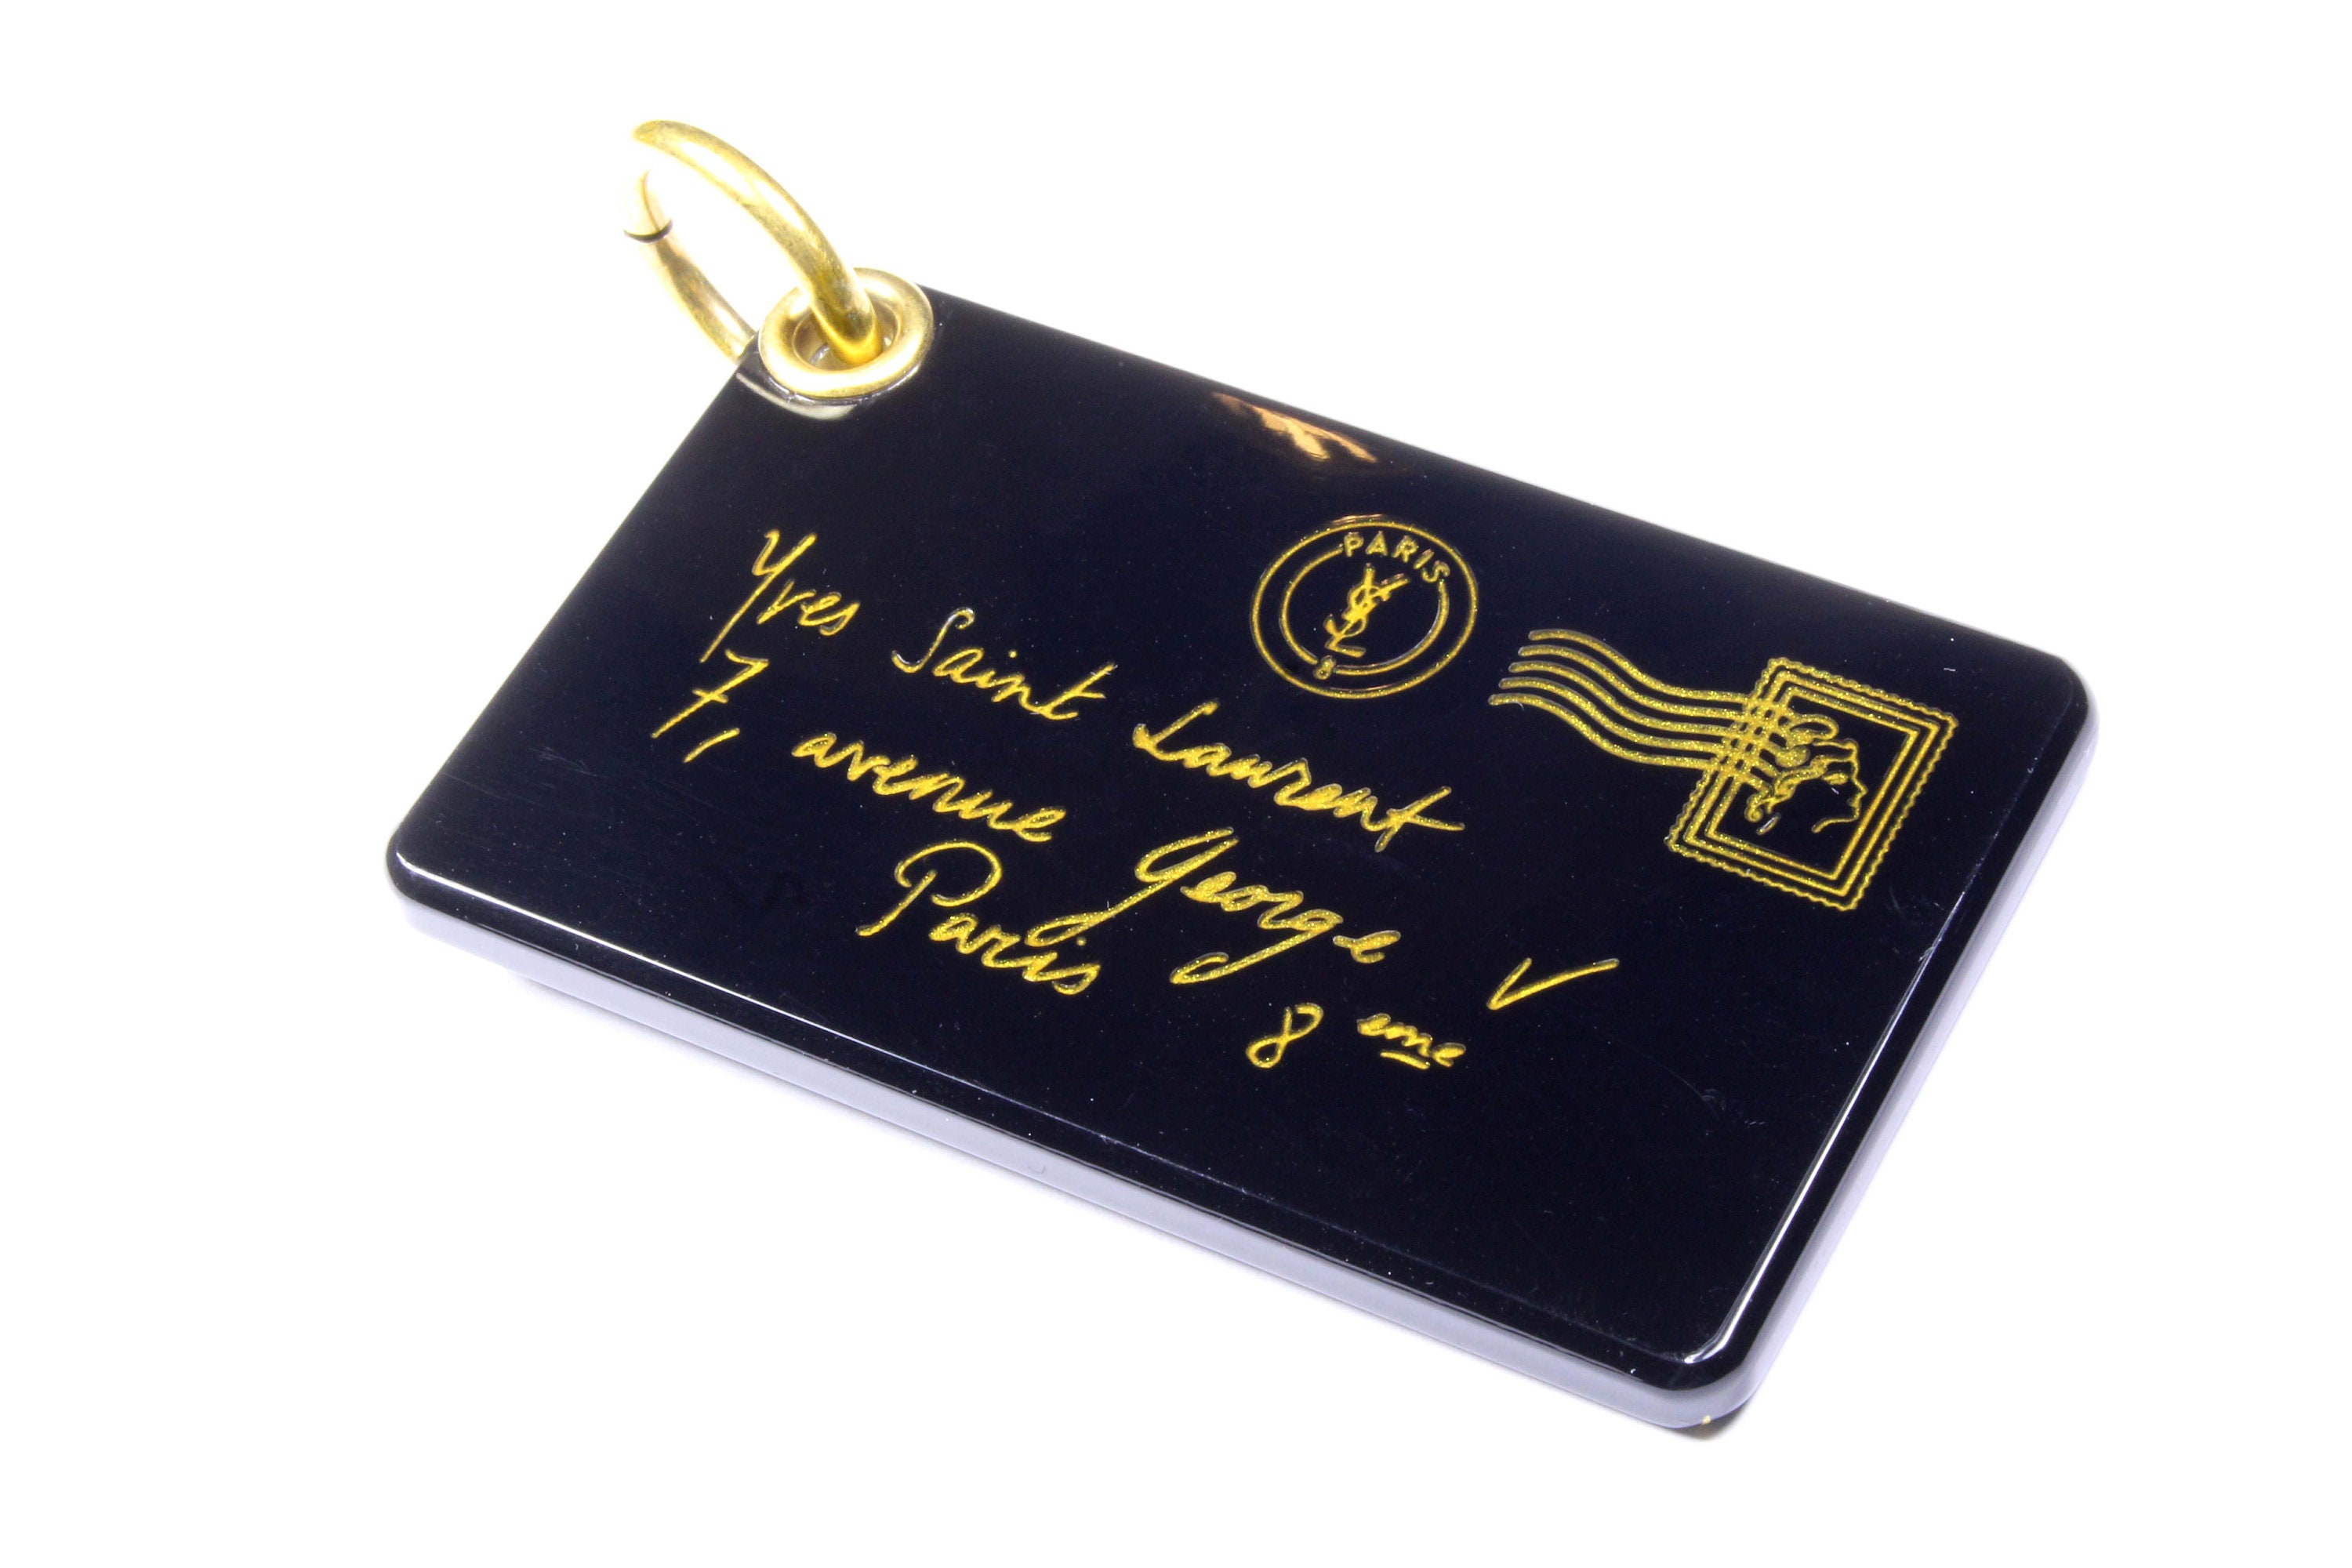 YVES SAINT LAURENT Y-mail large envelope key-ring bag charm